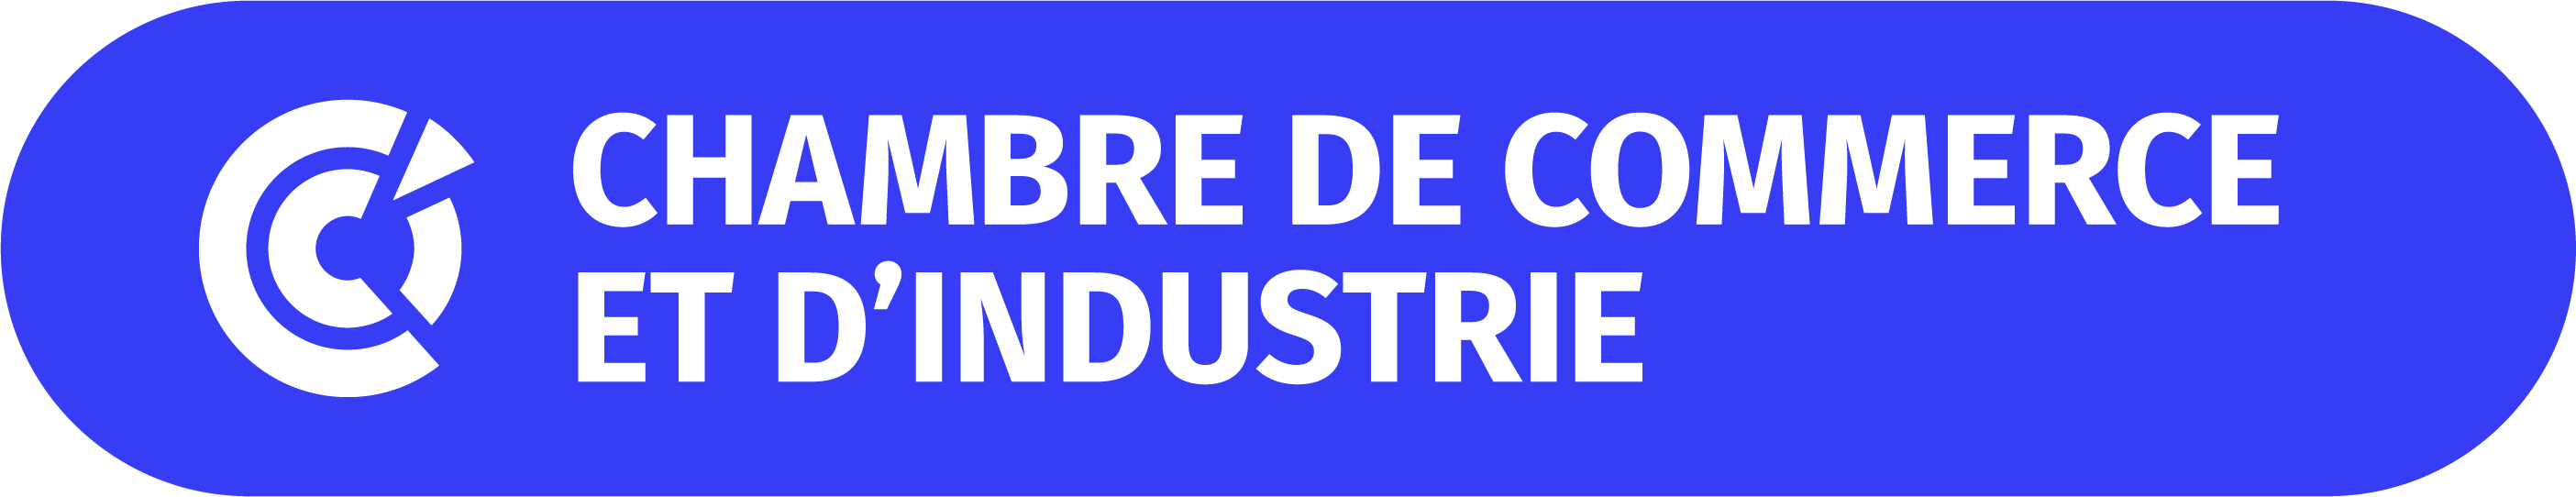 logo CCI de France